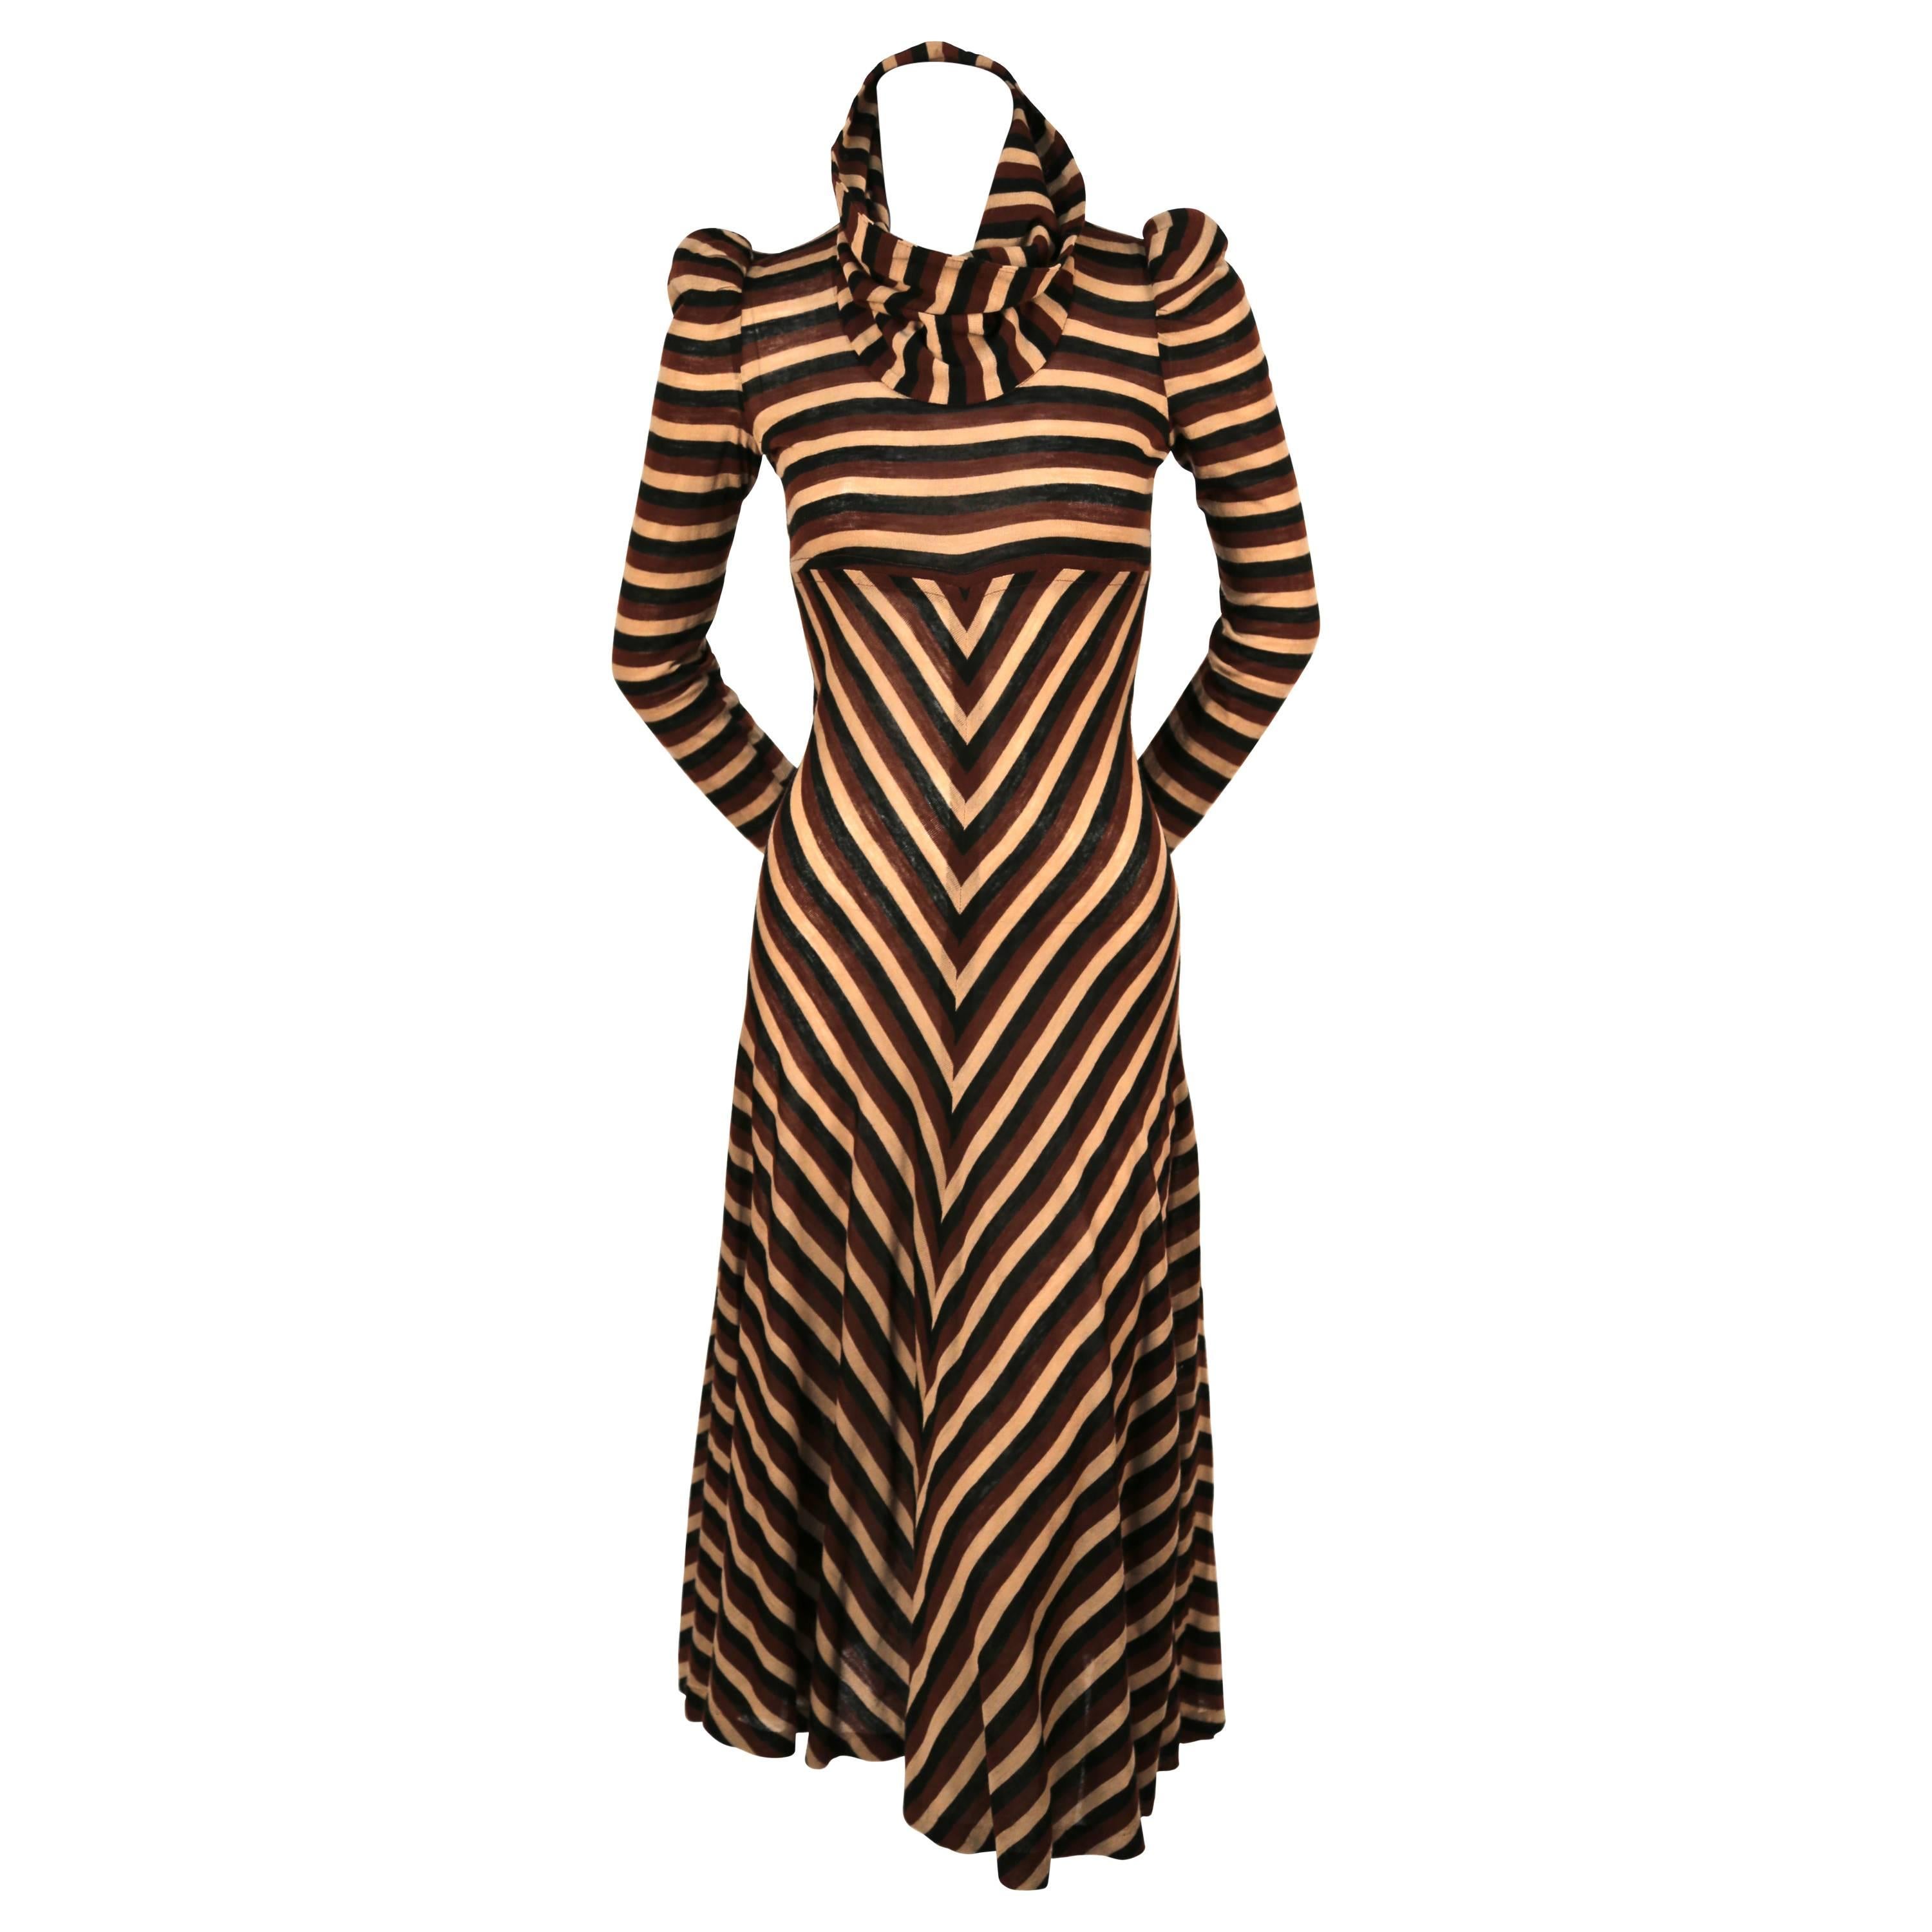 1970's BIBA metallic chevron striped dress with cowl neck 